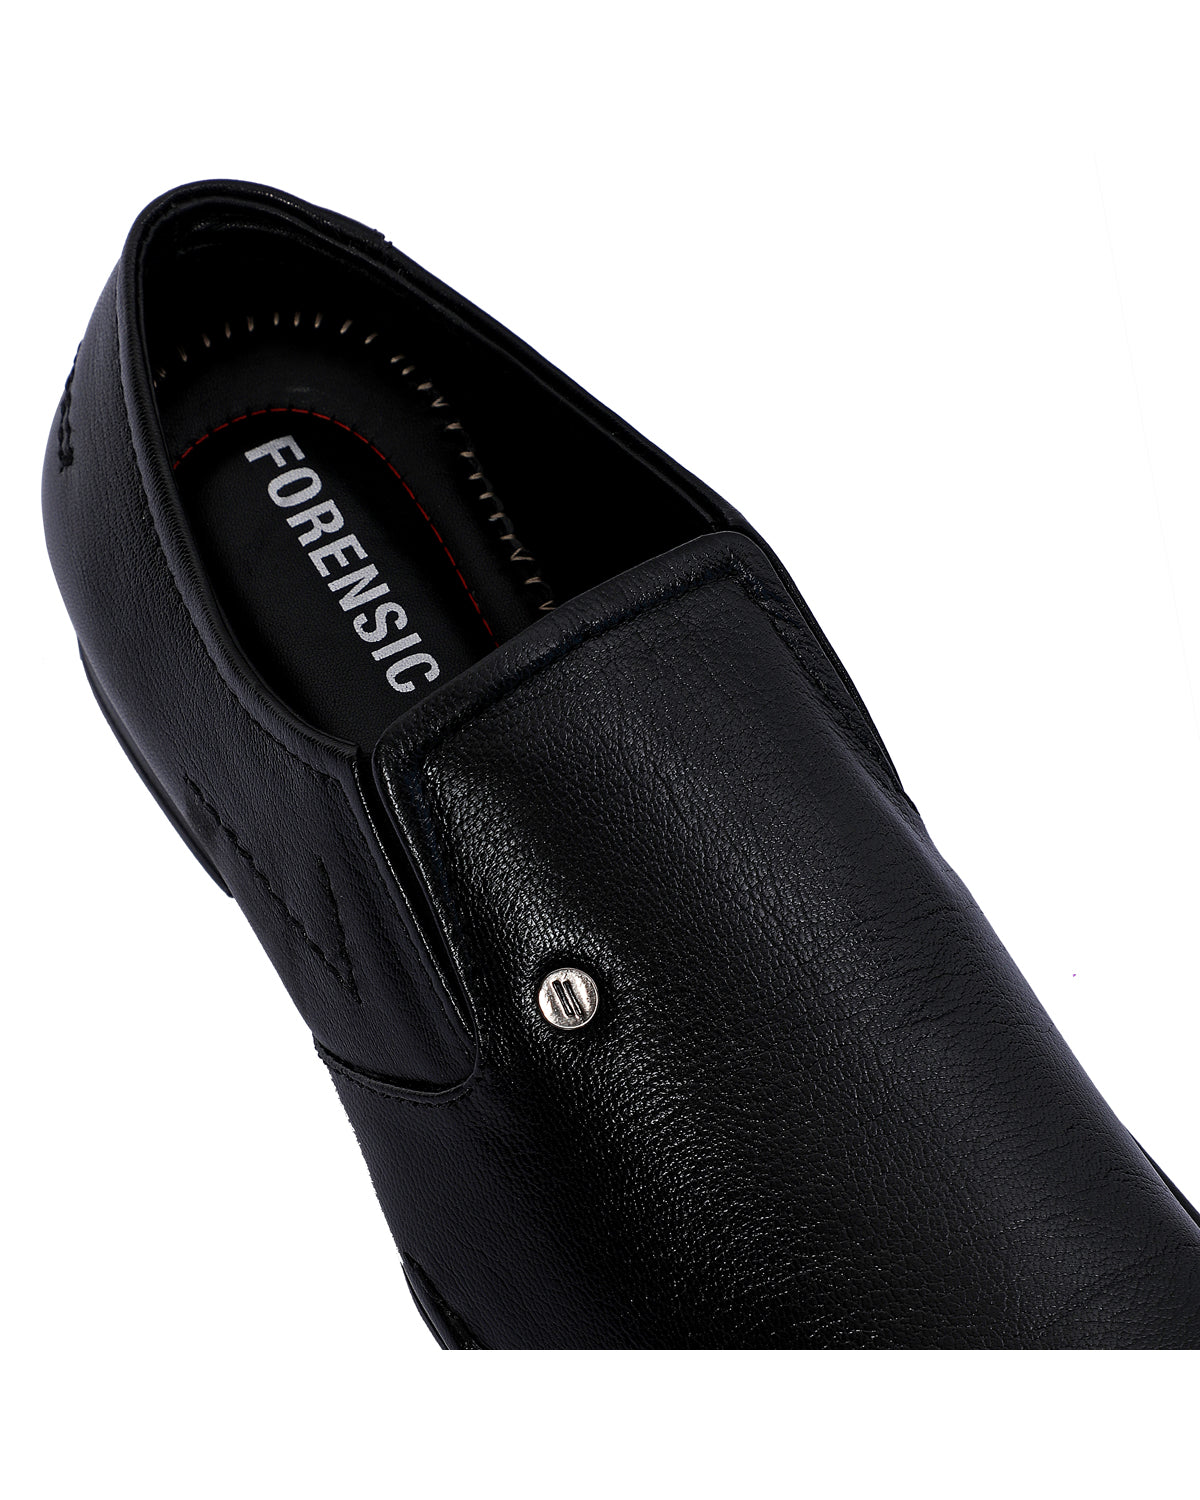 Premium Office Wear Slip on Formal Shoes - Black